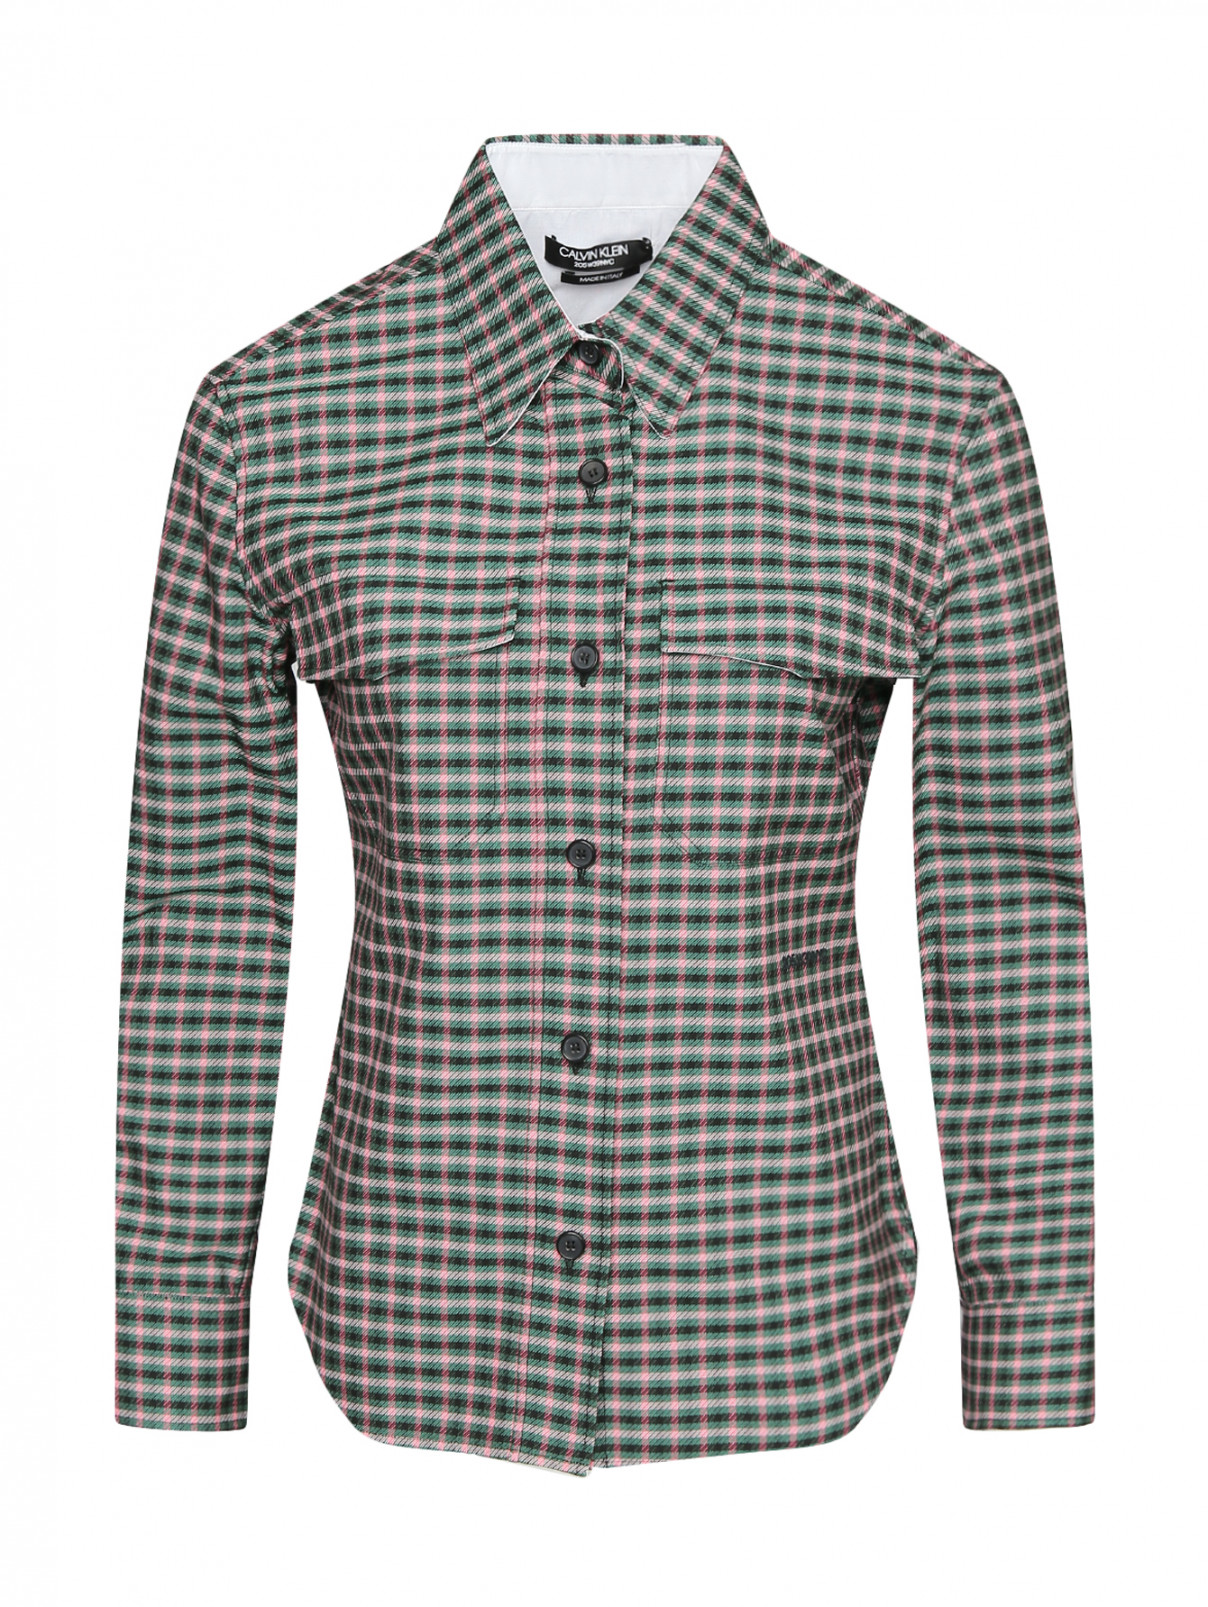 Рубашка с узором клетка Calvin Klein 205W39NYC  –  Общий вид  – Цвет:  Узор